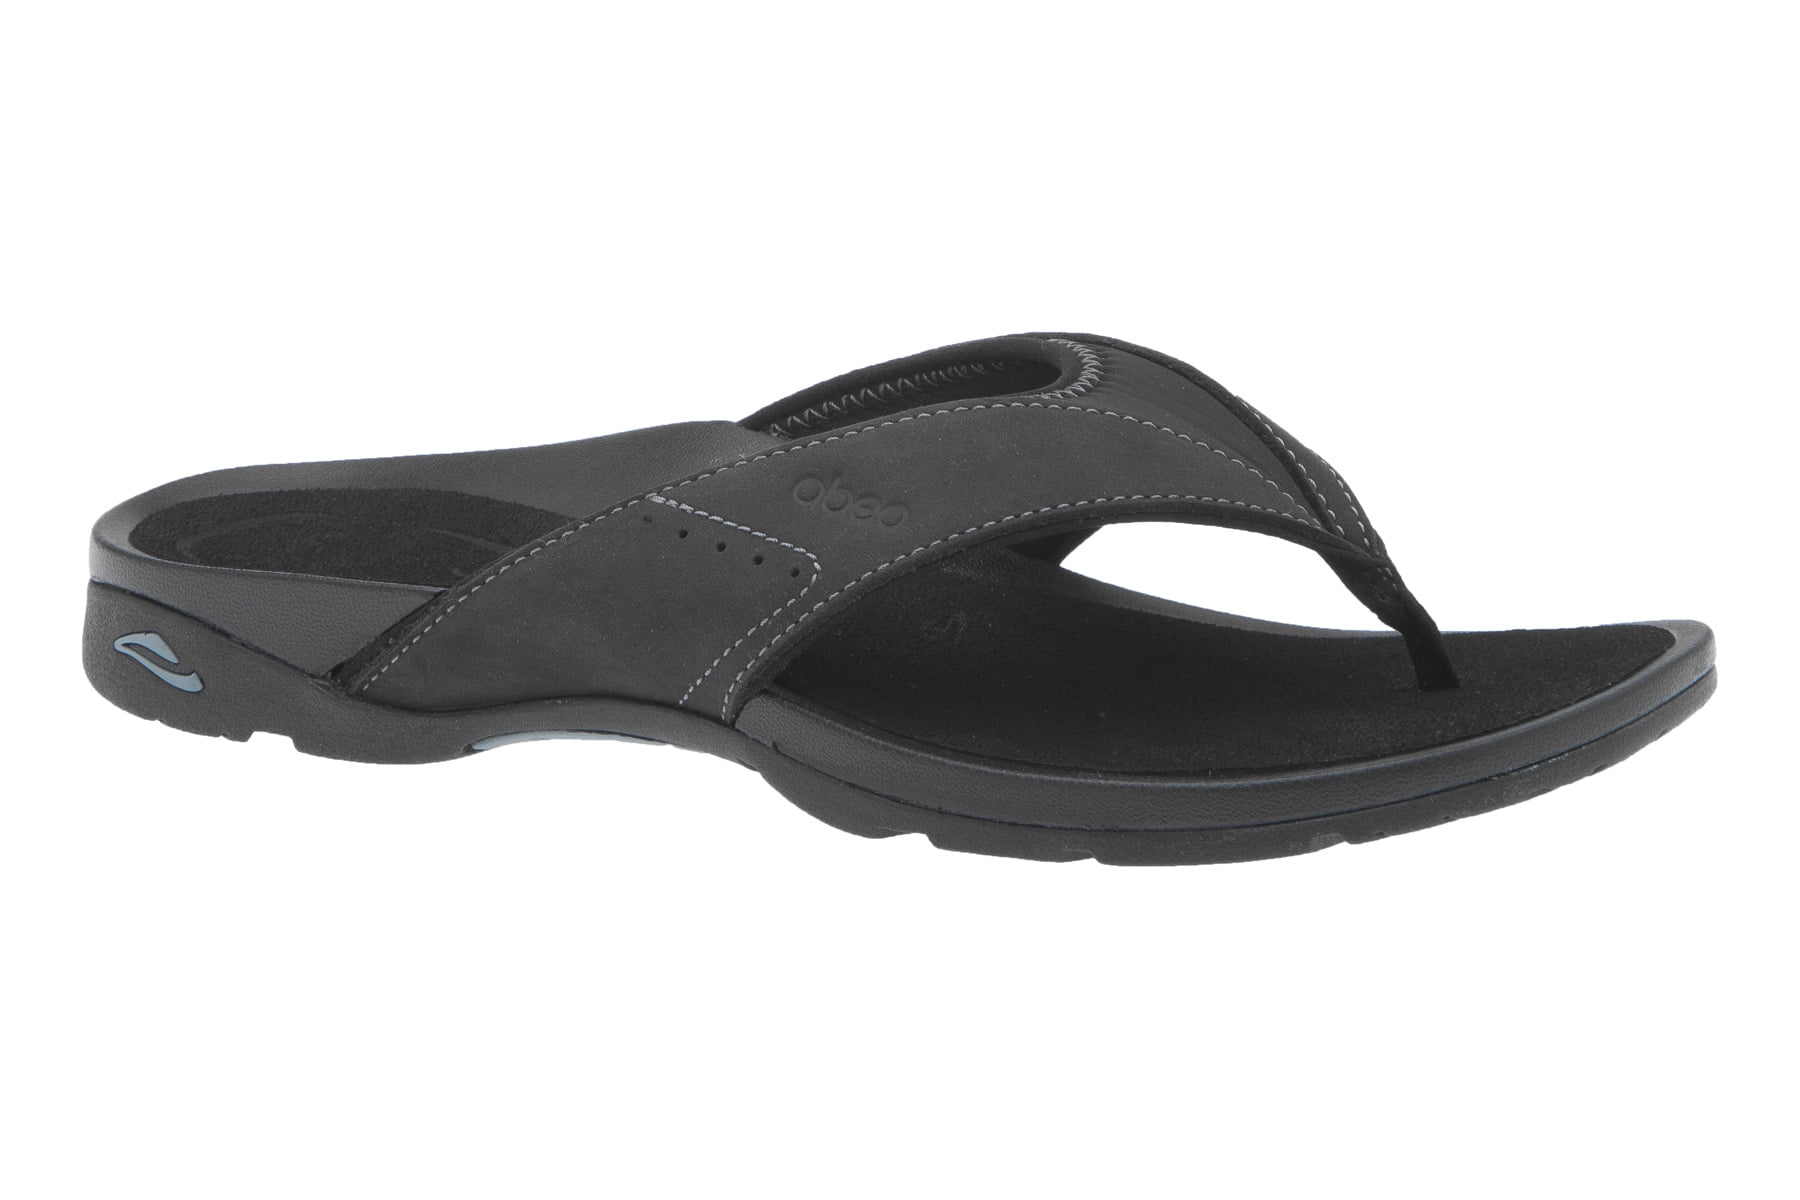 Balboa Metatarsal - Flip Flop Sandals 